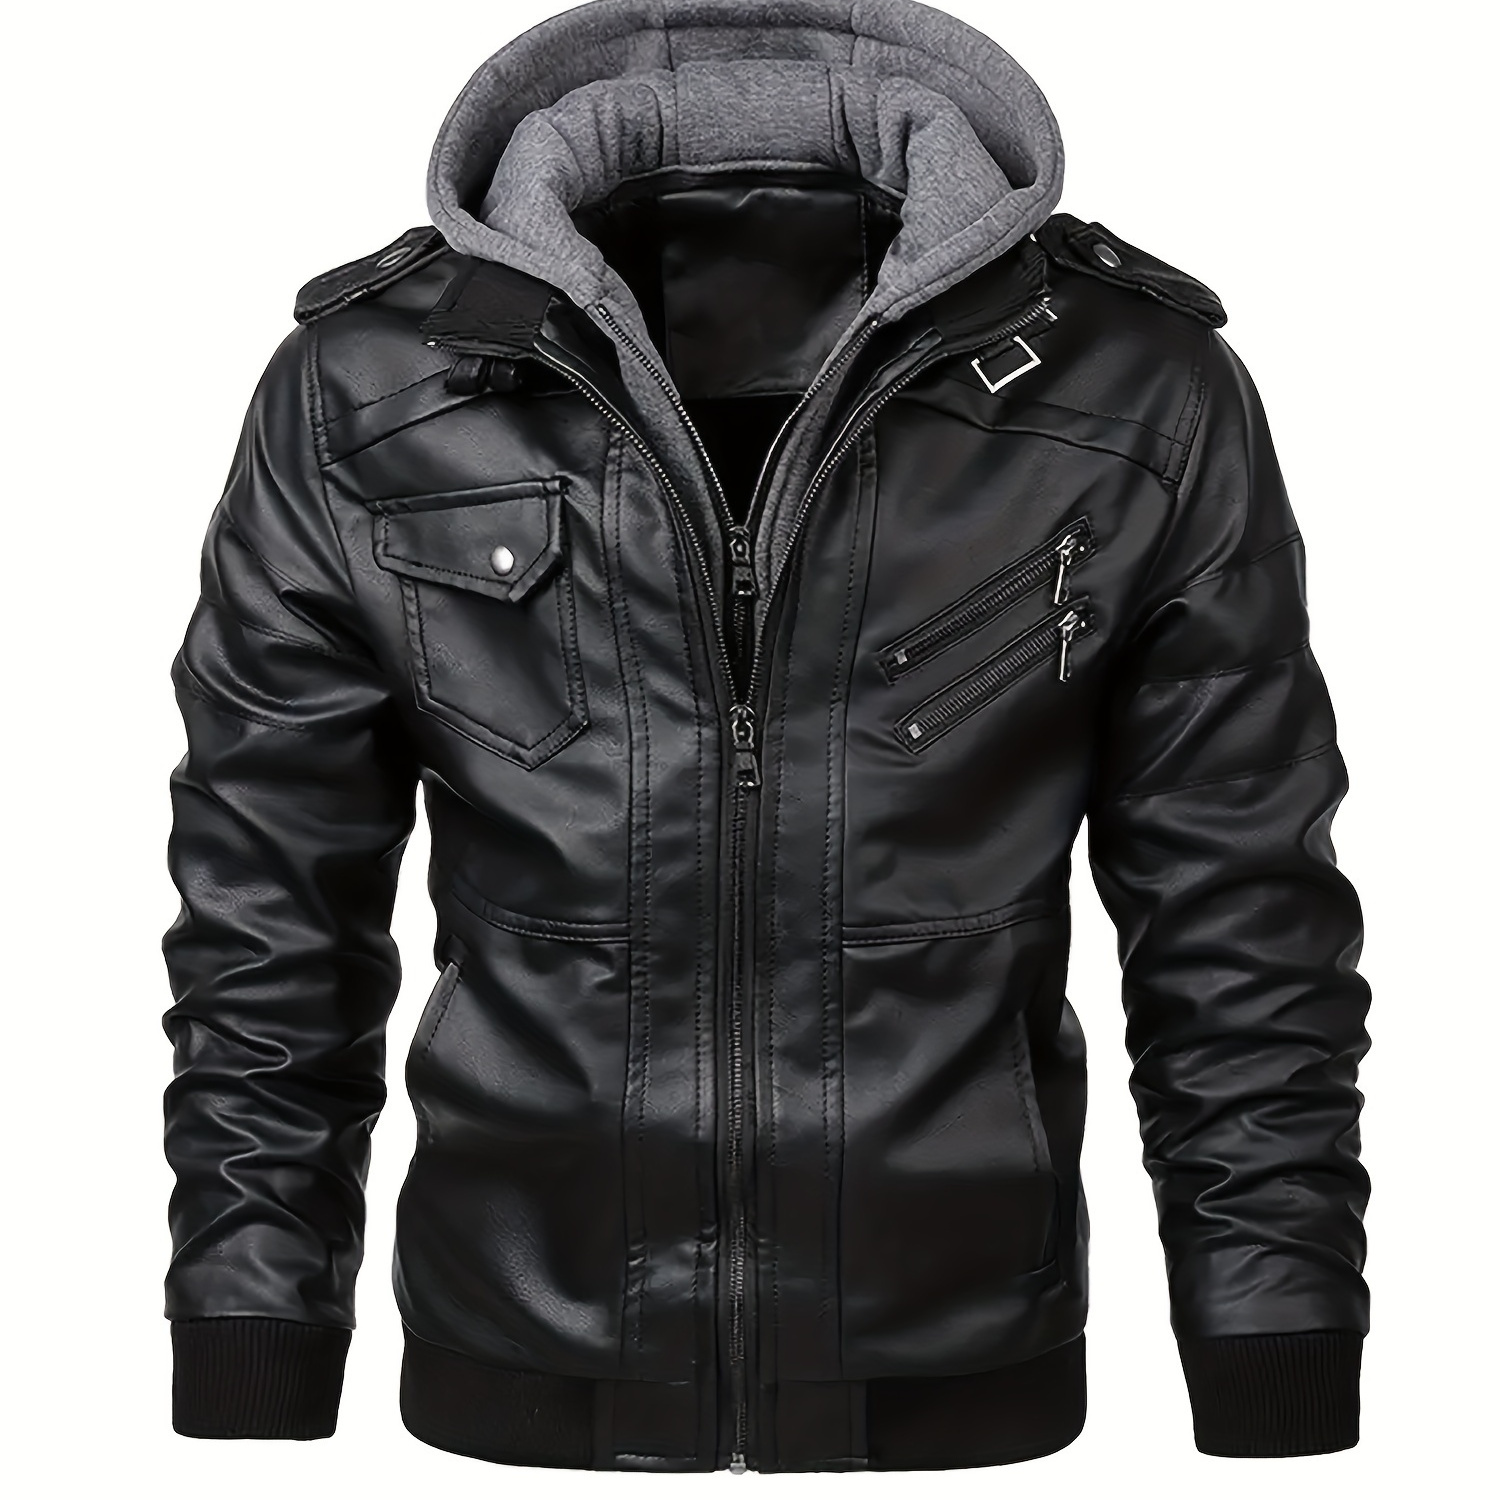 

Men's Casual Pu Leather Jacket, Chic Zip Up Hooded Biker Jacket